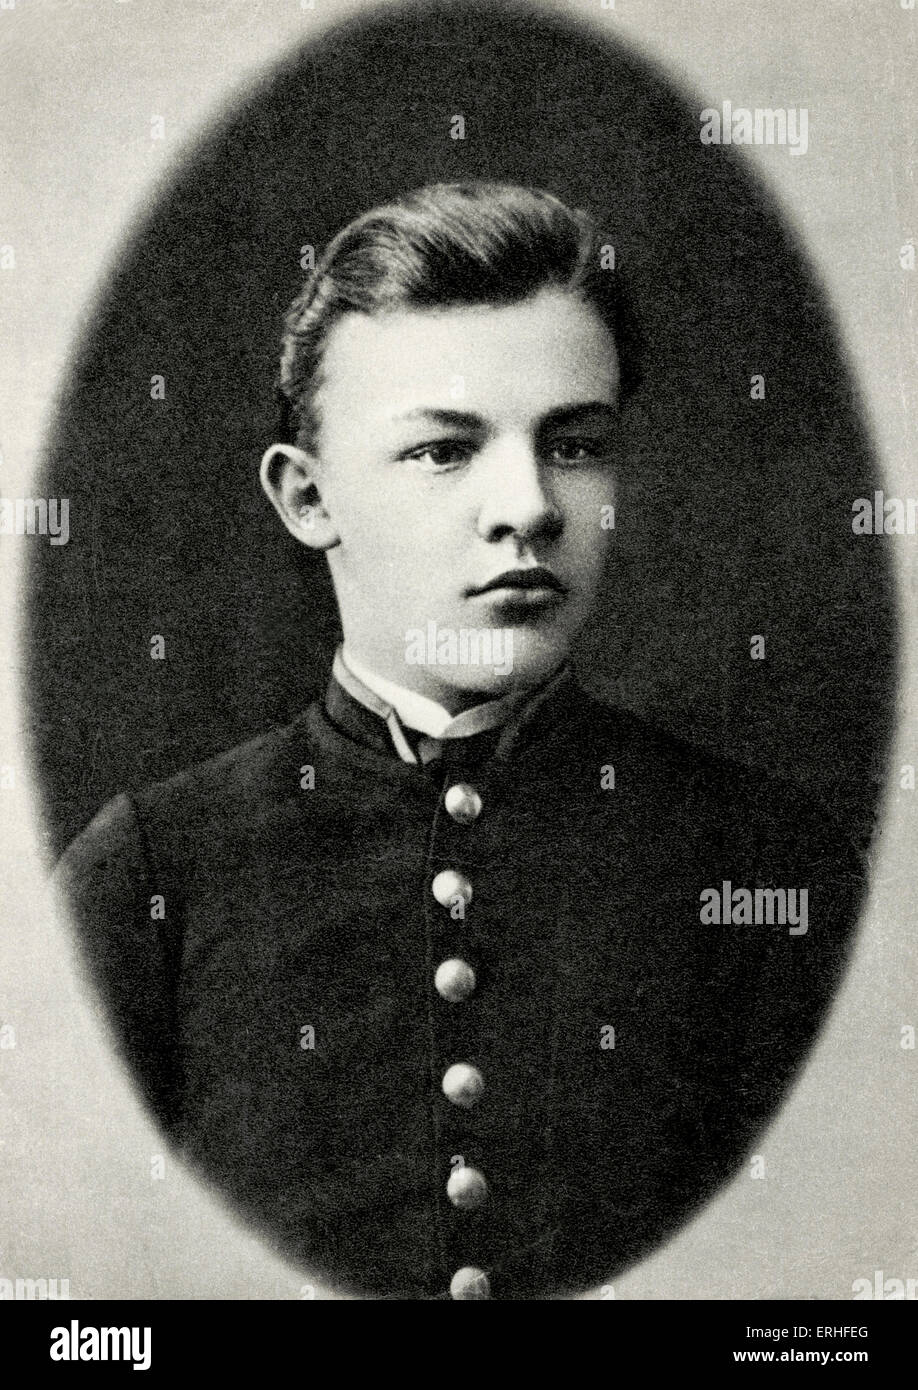 Vladimir Ilyich Lenin - Porträt als junger Mann, 1887 - 17 Jahre alt. Russische revolutionäre 22. April 1870 - 21. Januar 1924 Stockfoto